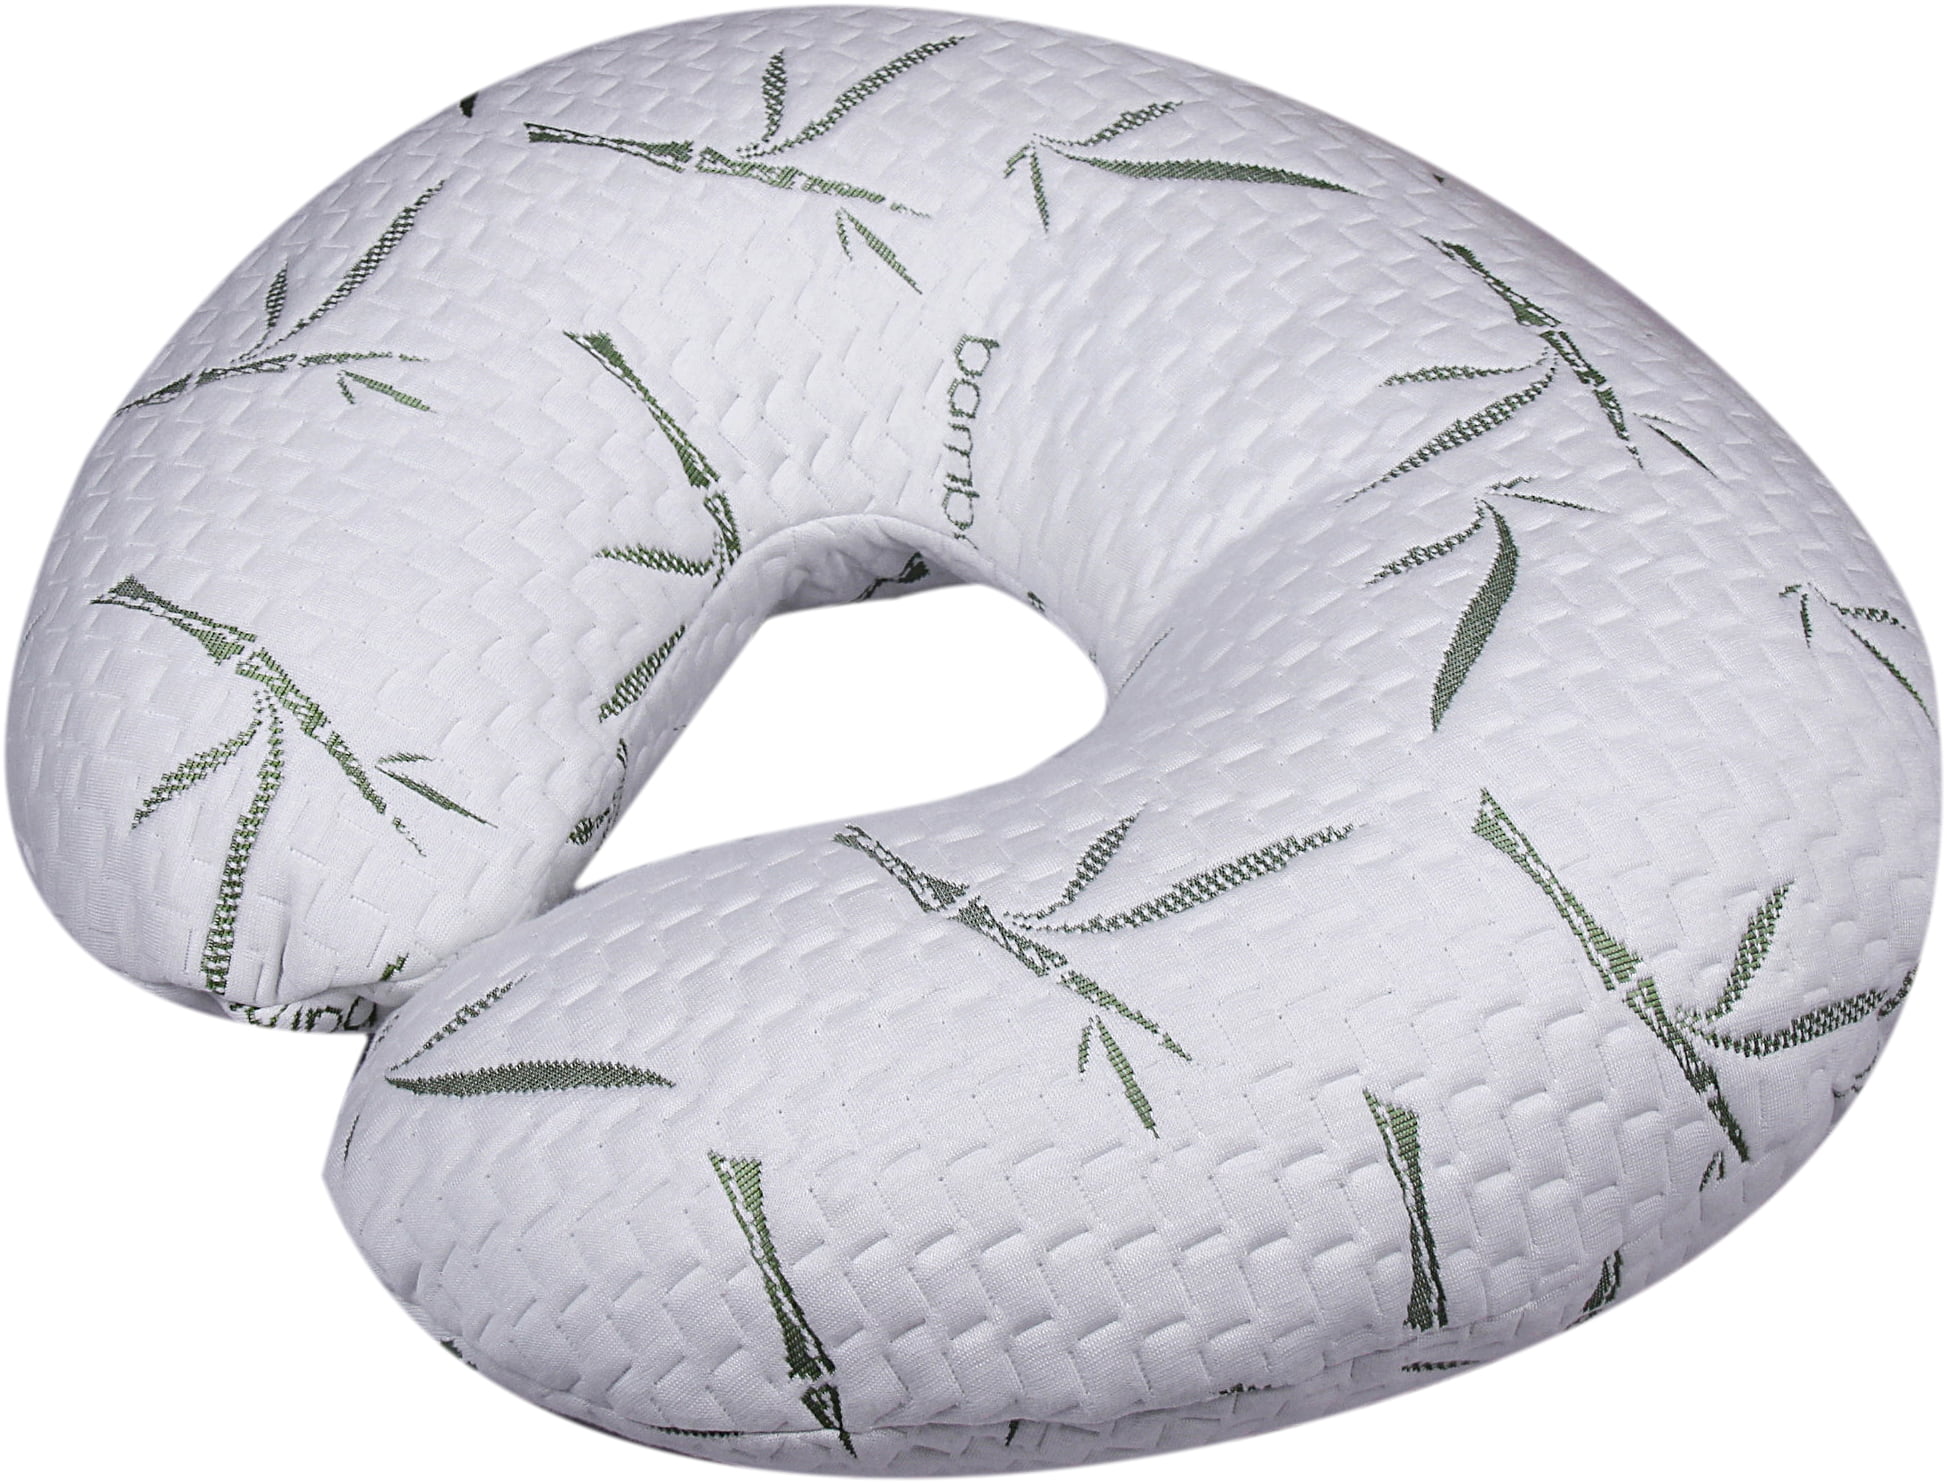 enfamil inflatable nursing pillow